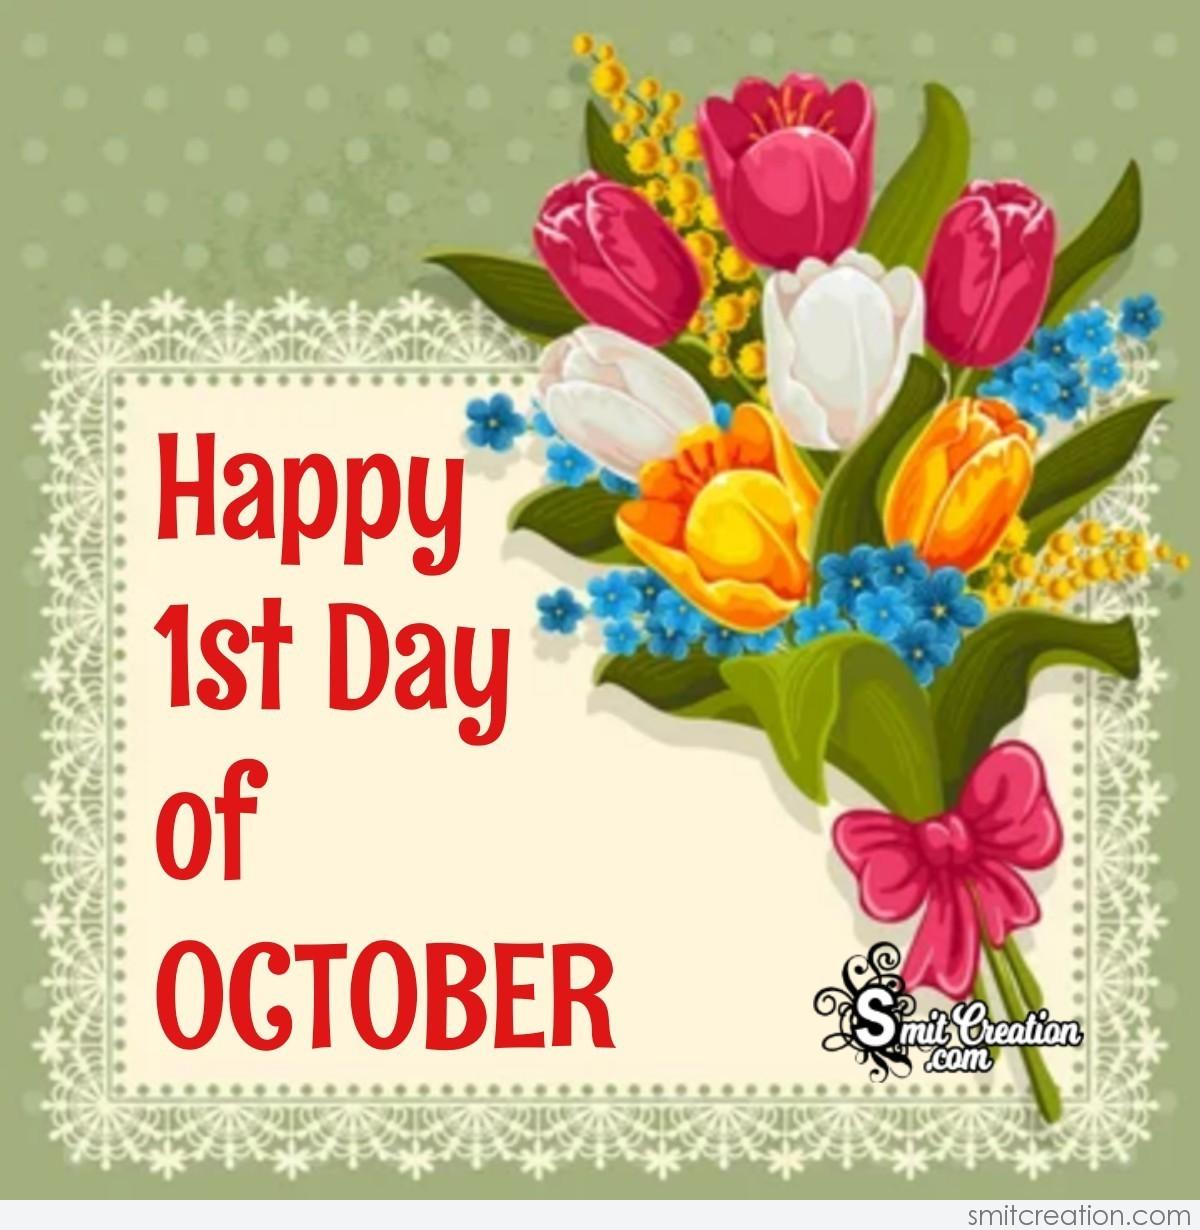 Happy 1st Day of OCTOBER - SmitCreation.com